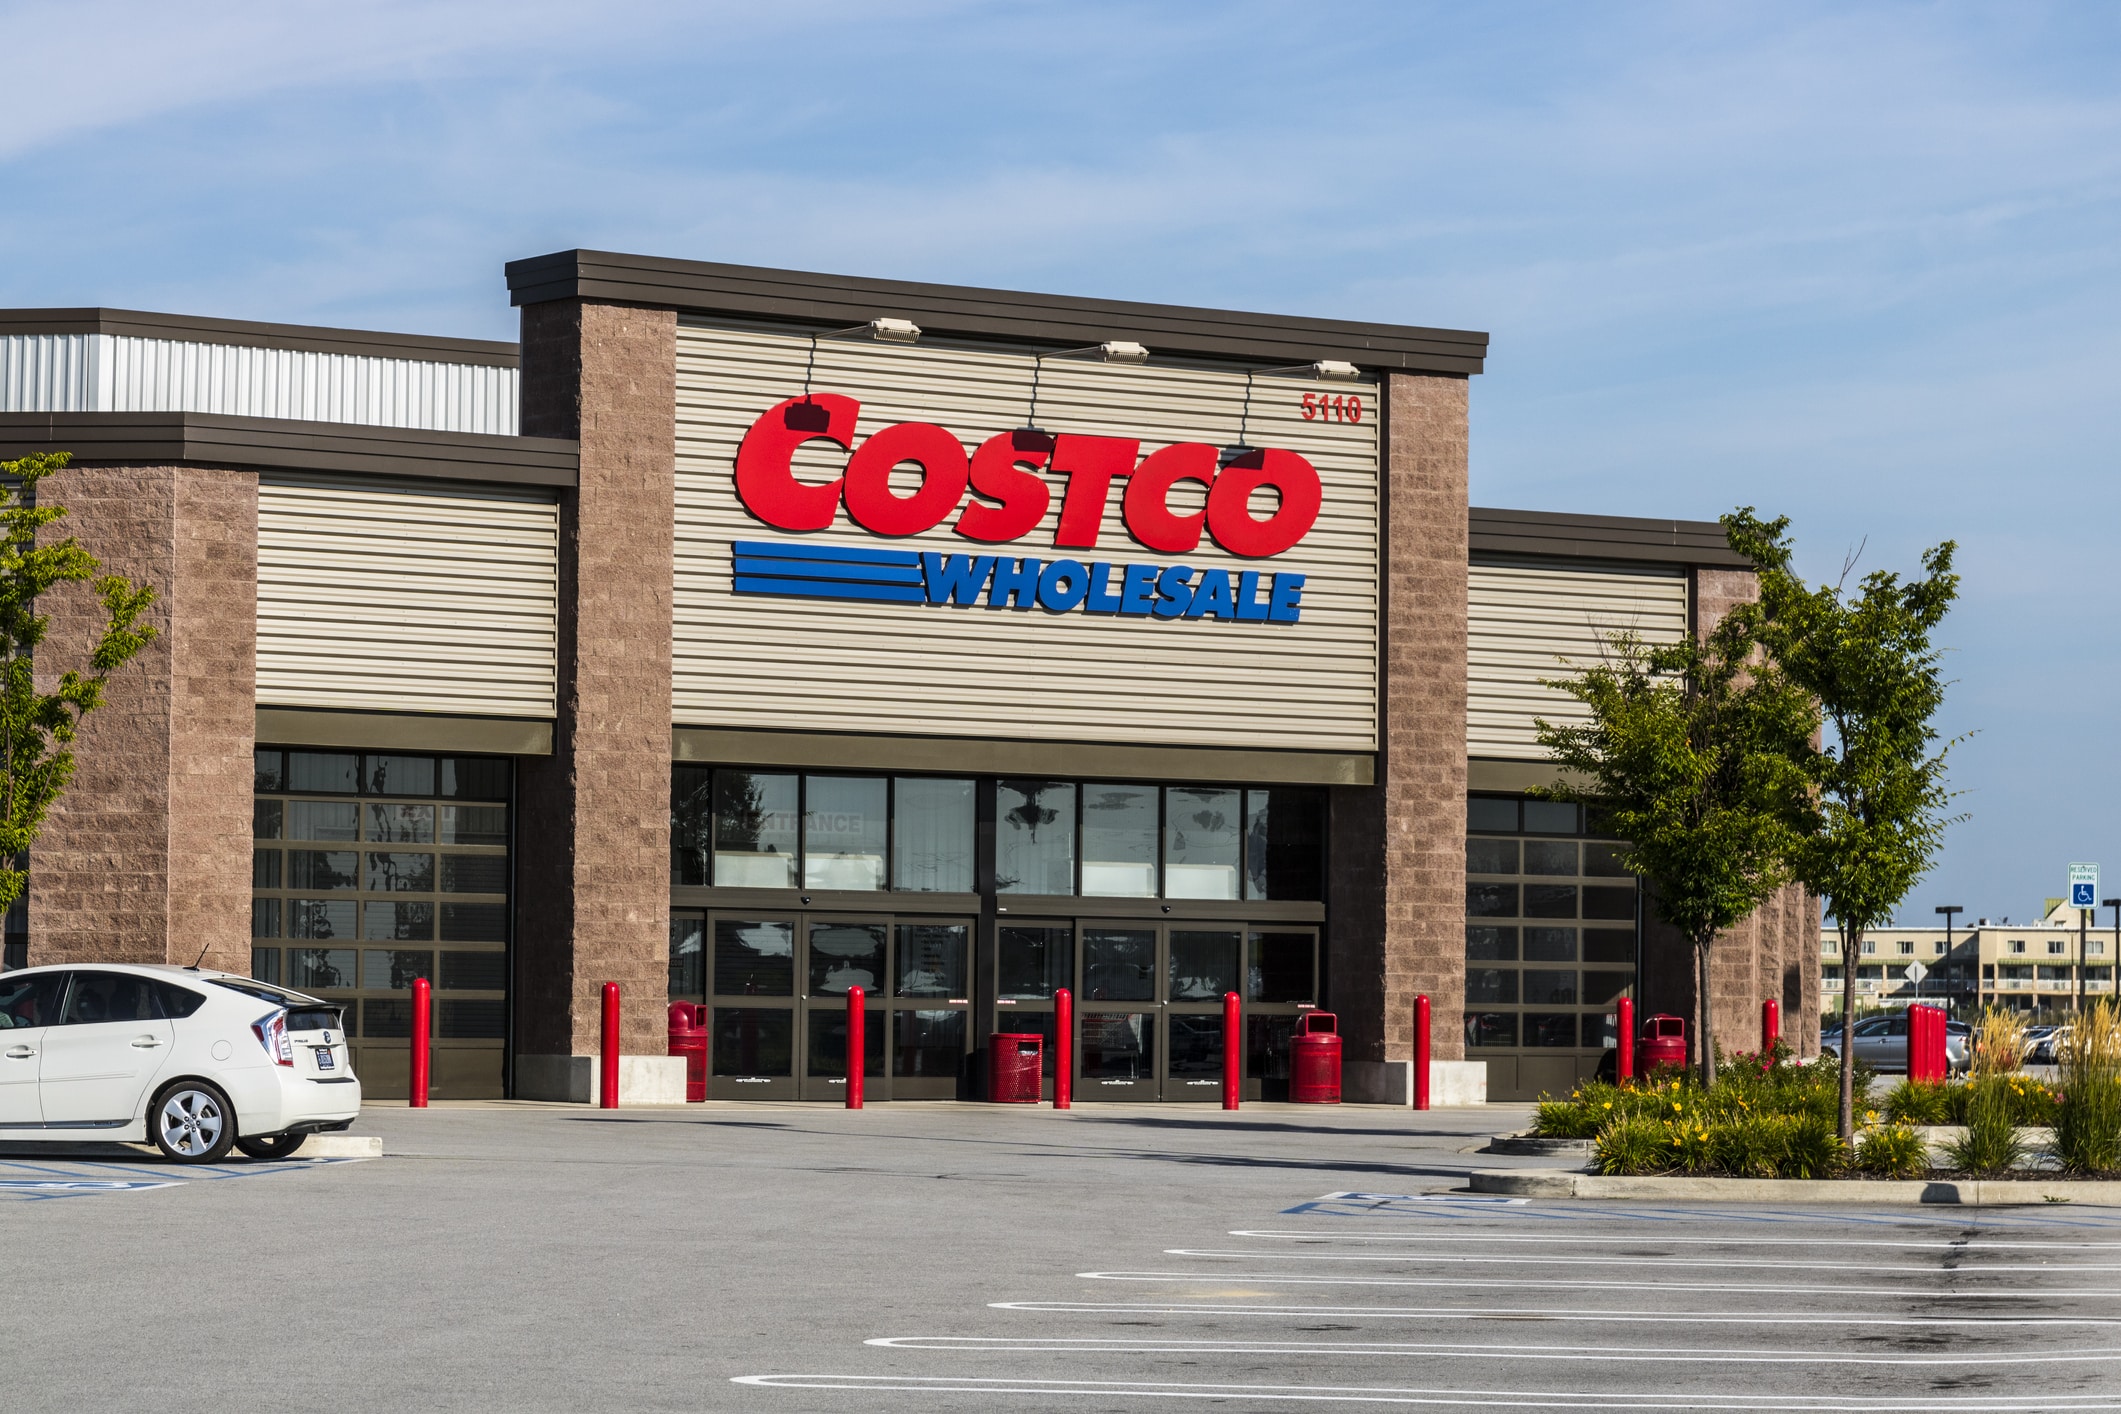 Costco membership discounts. Ft. Wayne - Circa August 2017: Costco Wholesale Location. Costco Wholesale is a Multi-Billion Dollar Global Retailer IX